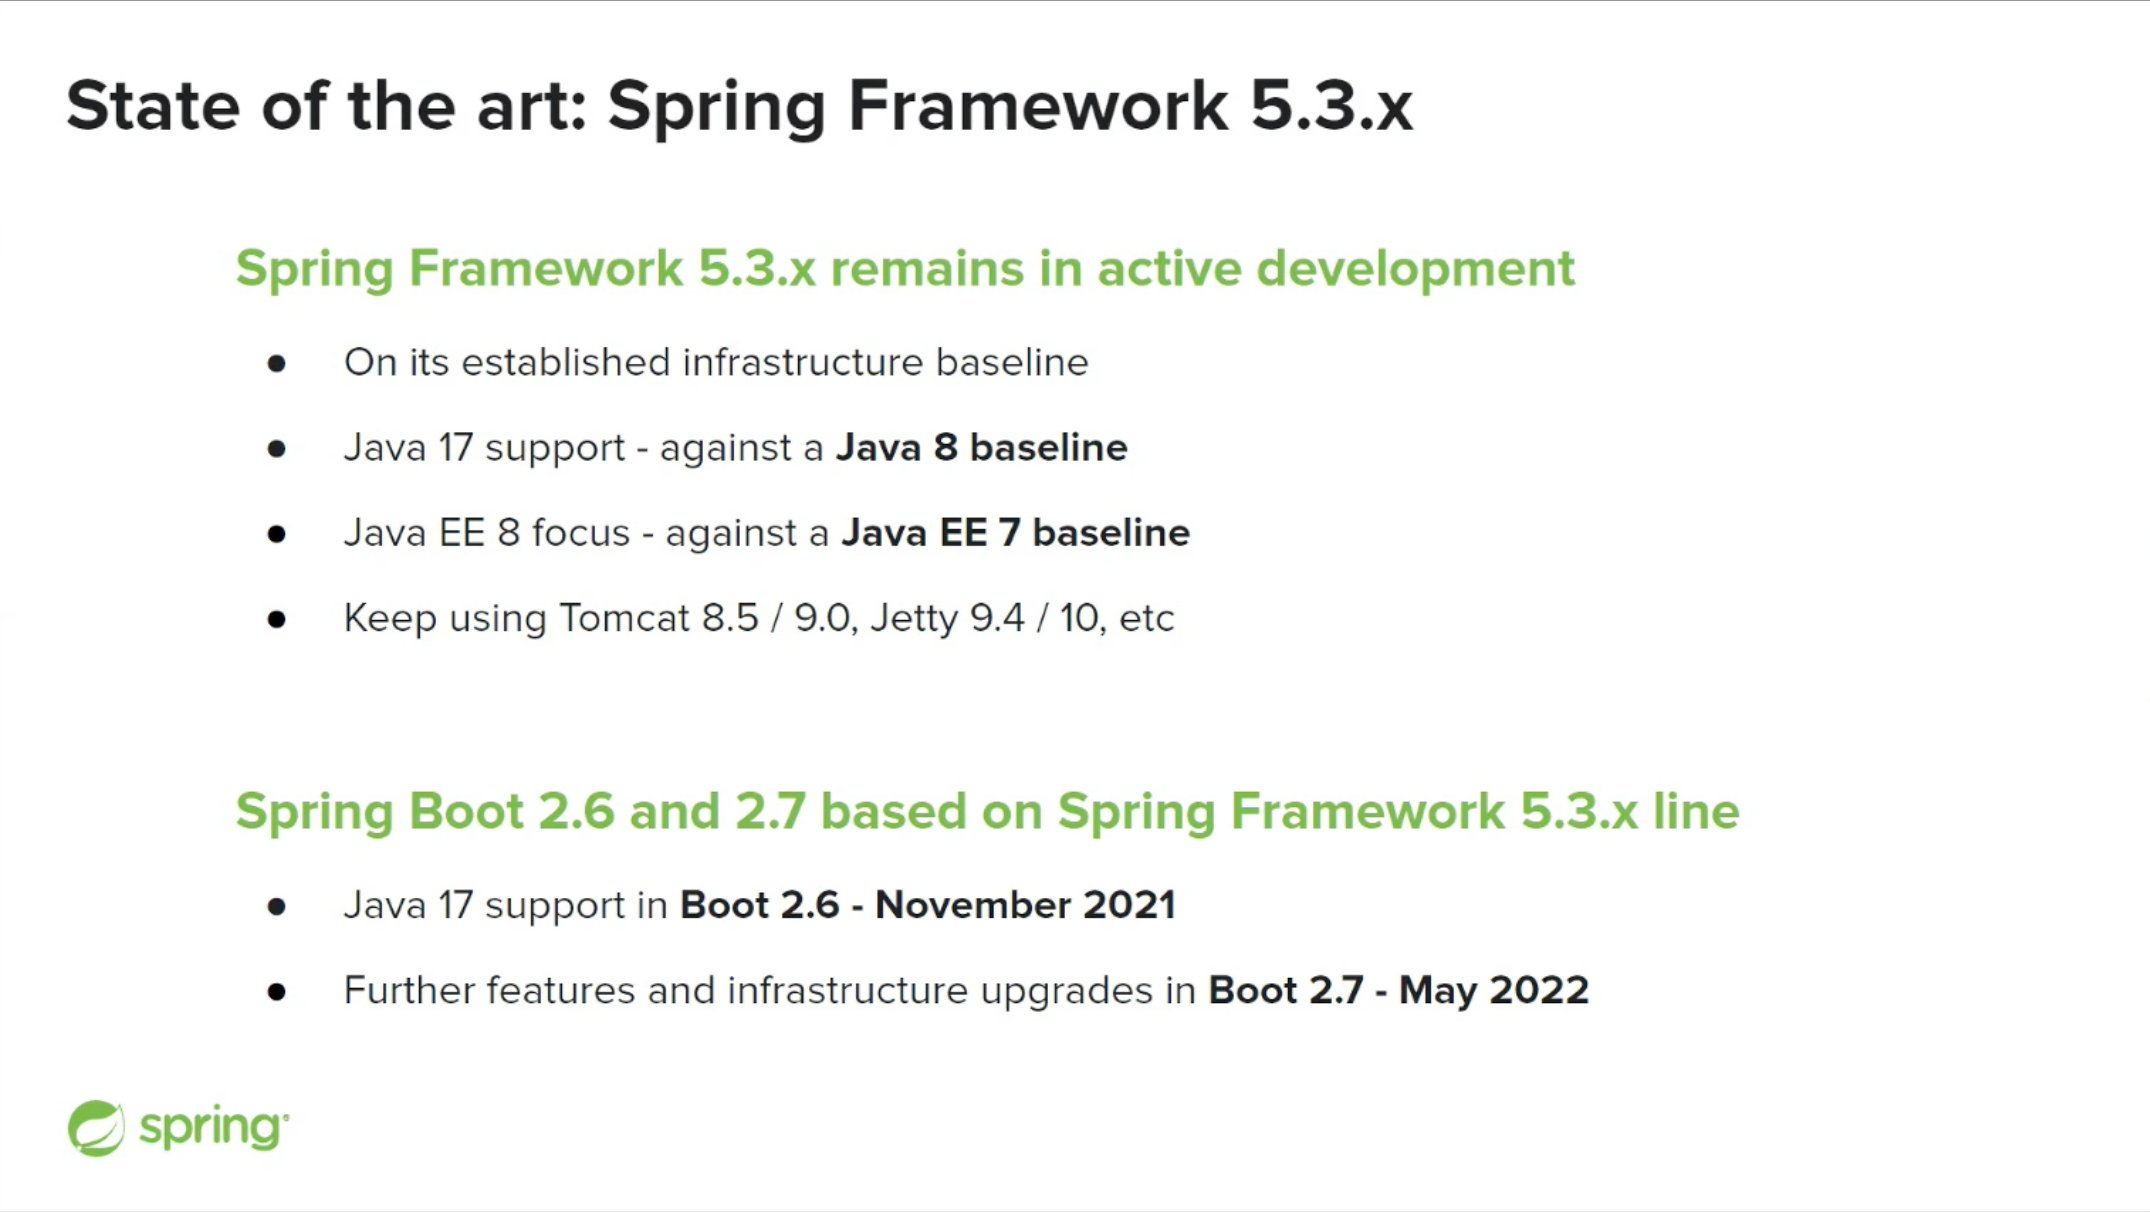 Spring Framework 5.3.x